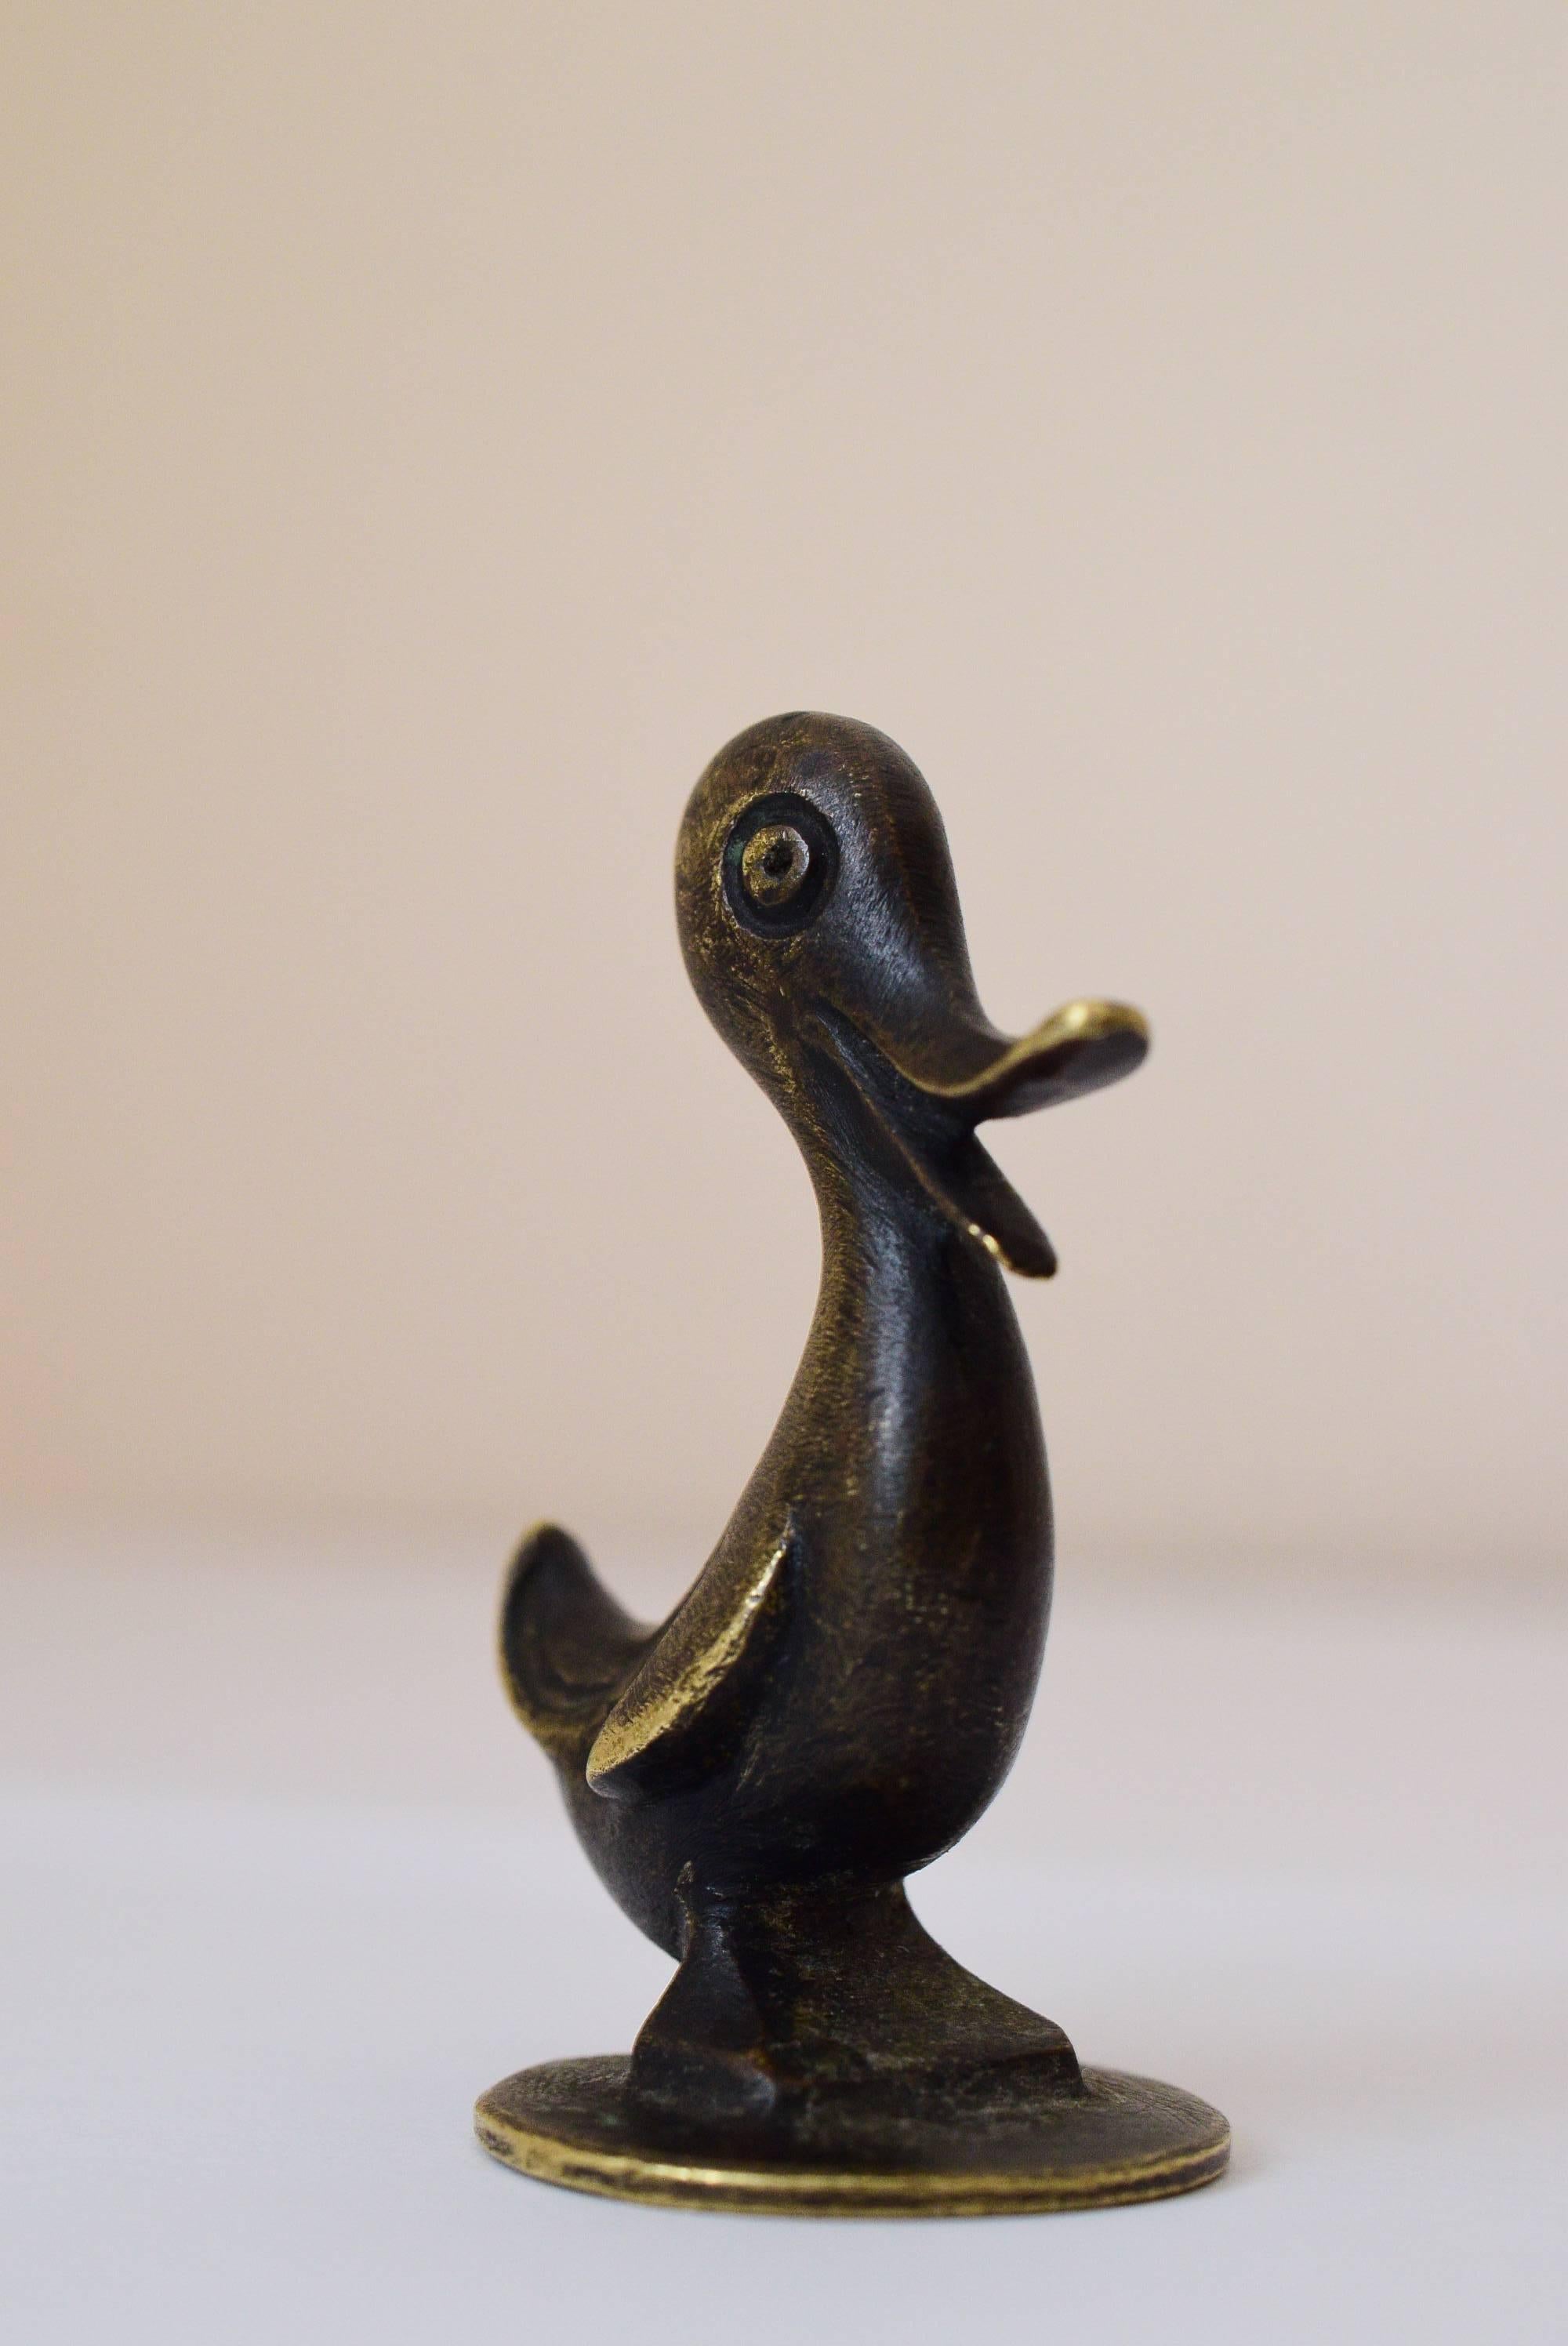 Duck by Richard Rohac.

Original condition.